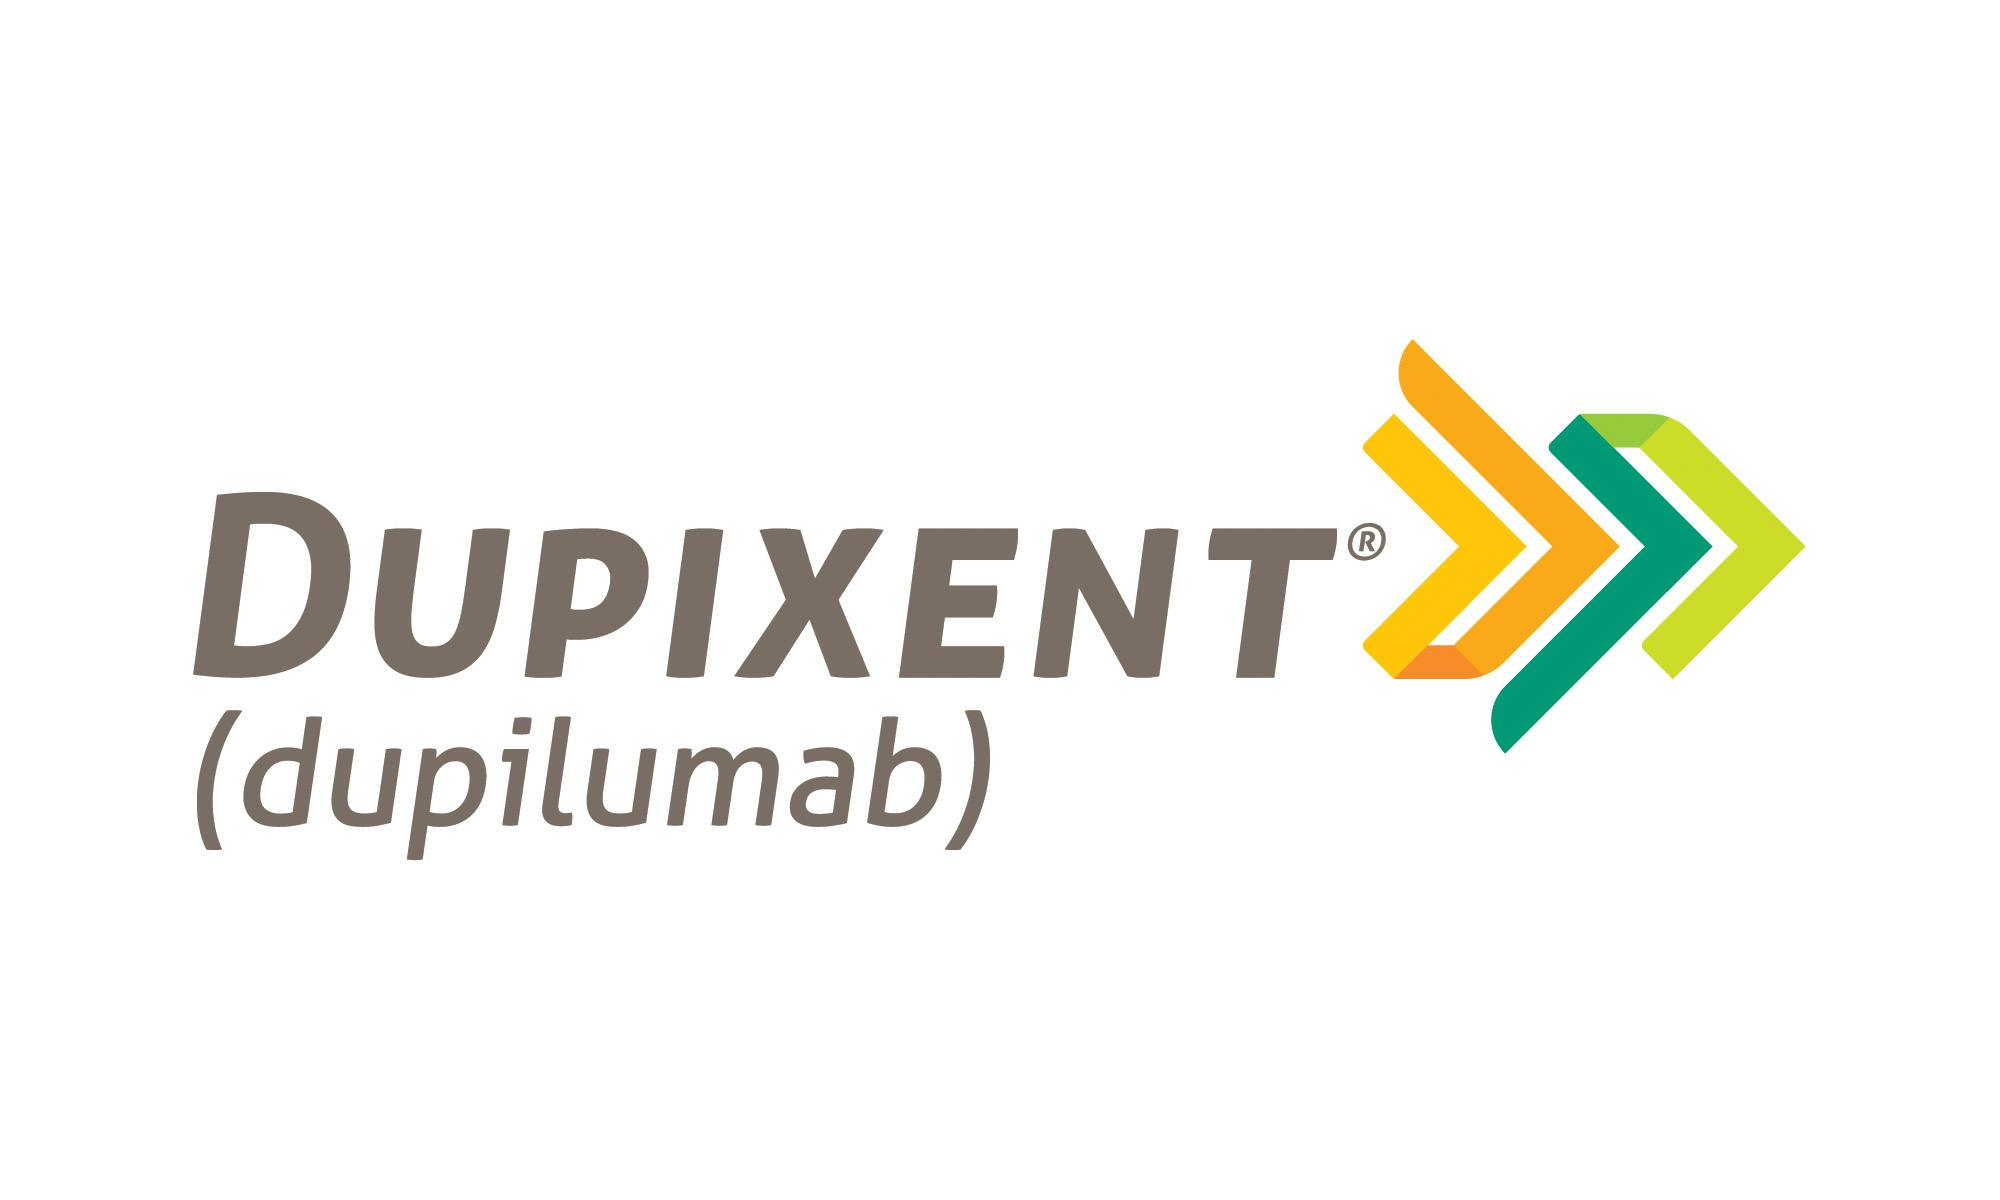 FDA批准新的Dupixent预填充笔，旨在支持更方便的自我管理形象